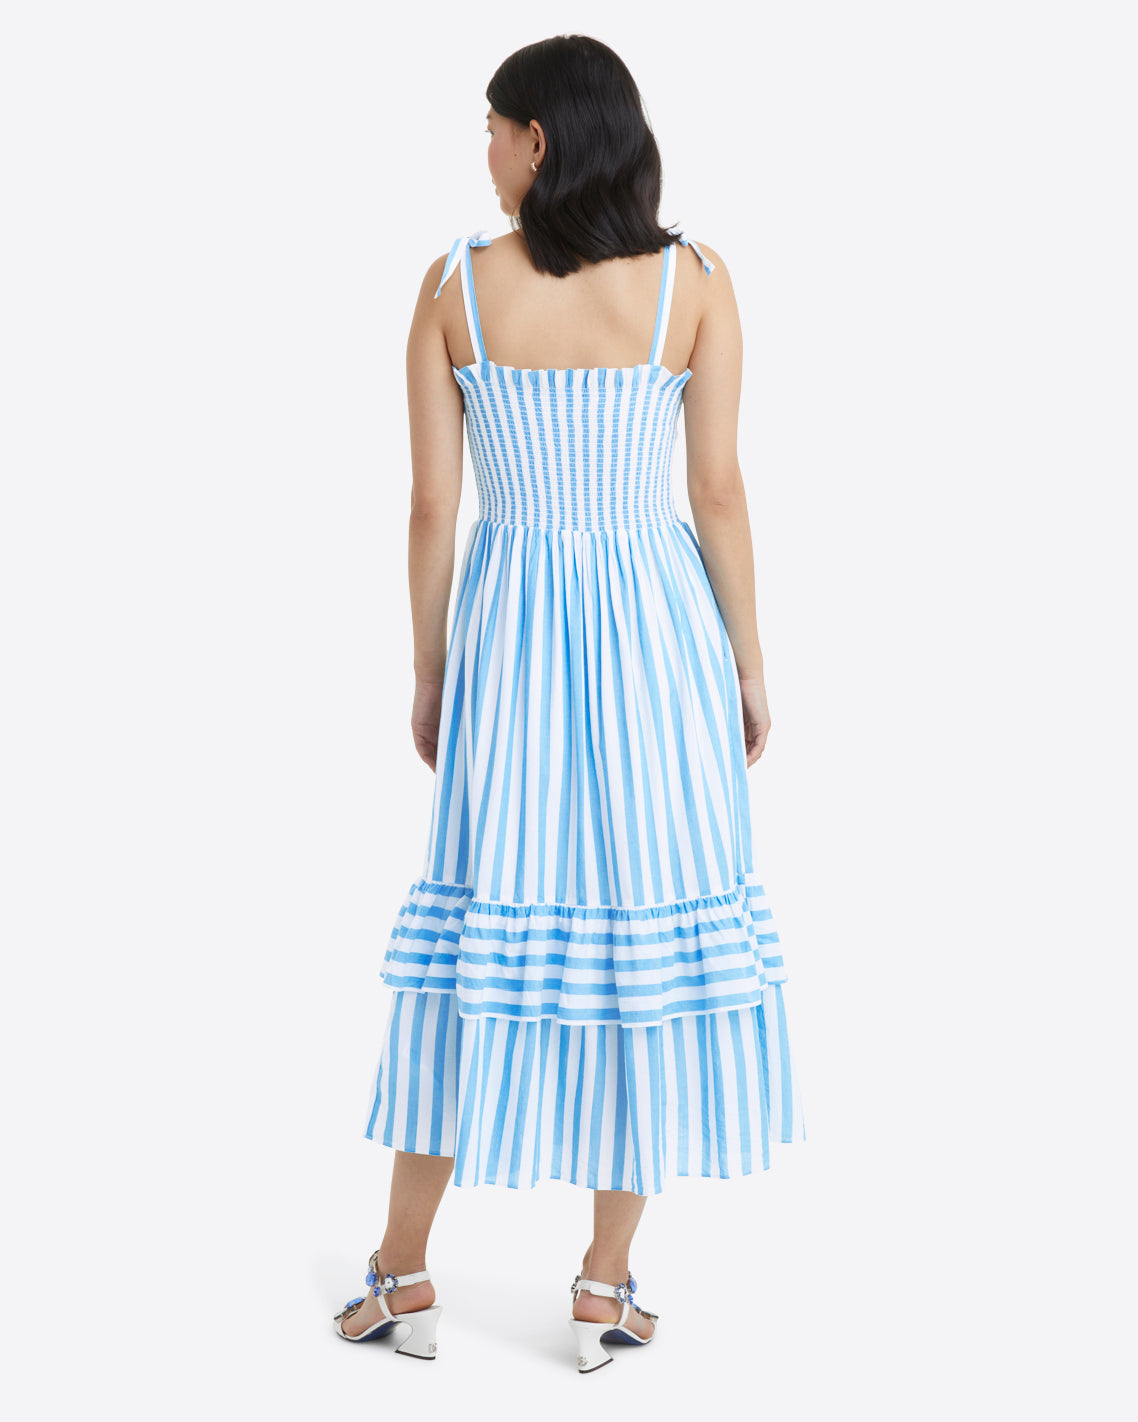 Taylor Dress in Awning Stripe